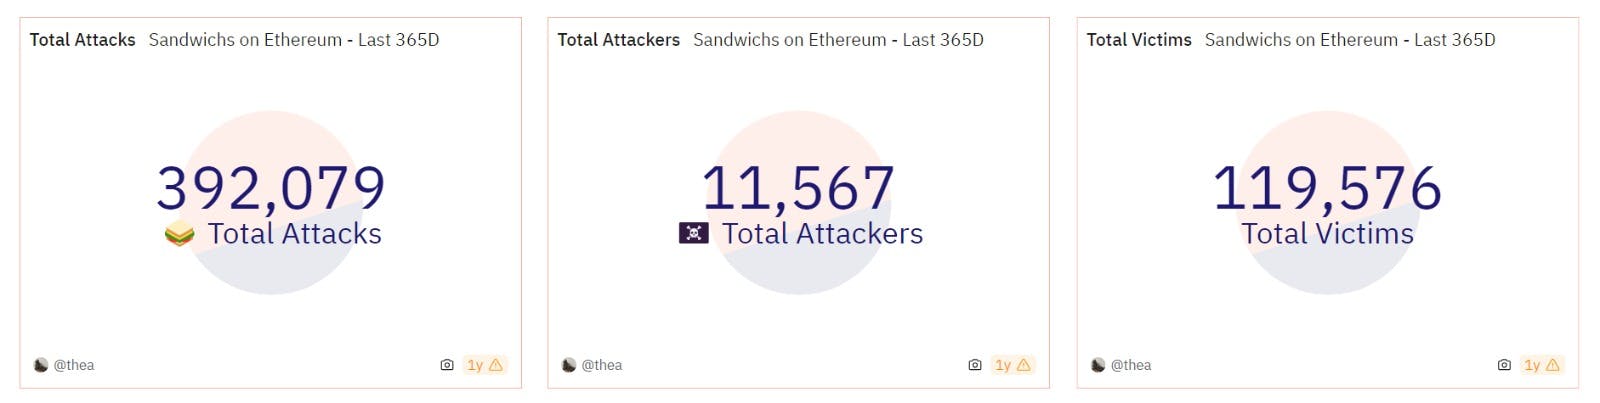 Sandwich Attack Statistics | Image Source: Dune